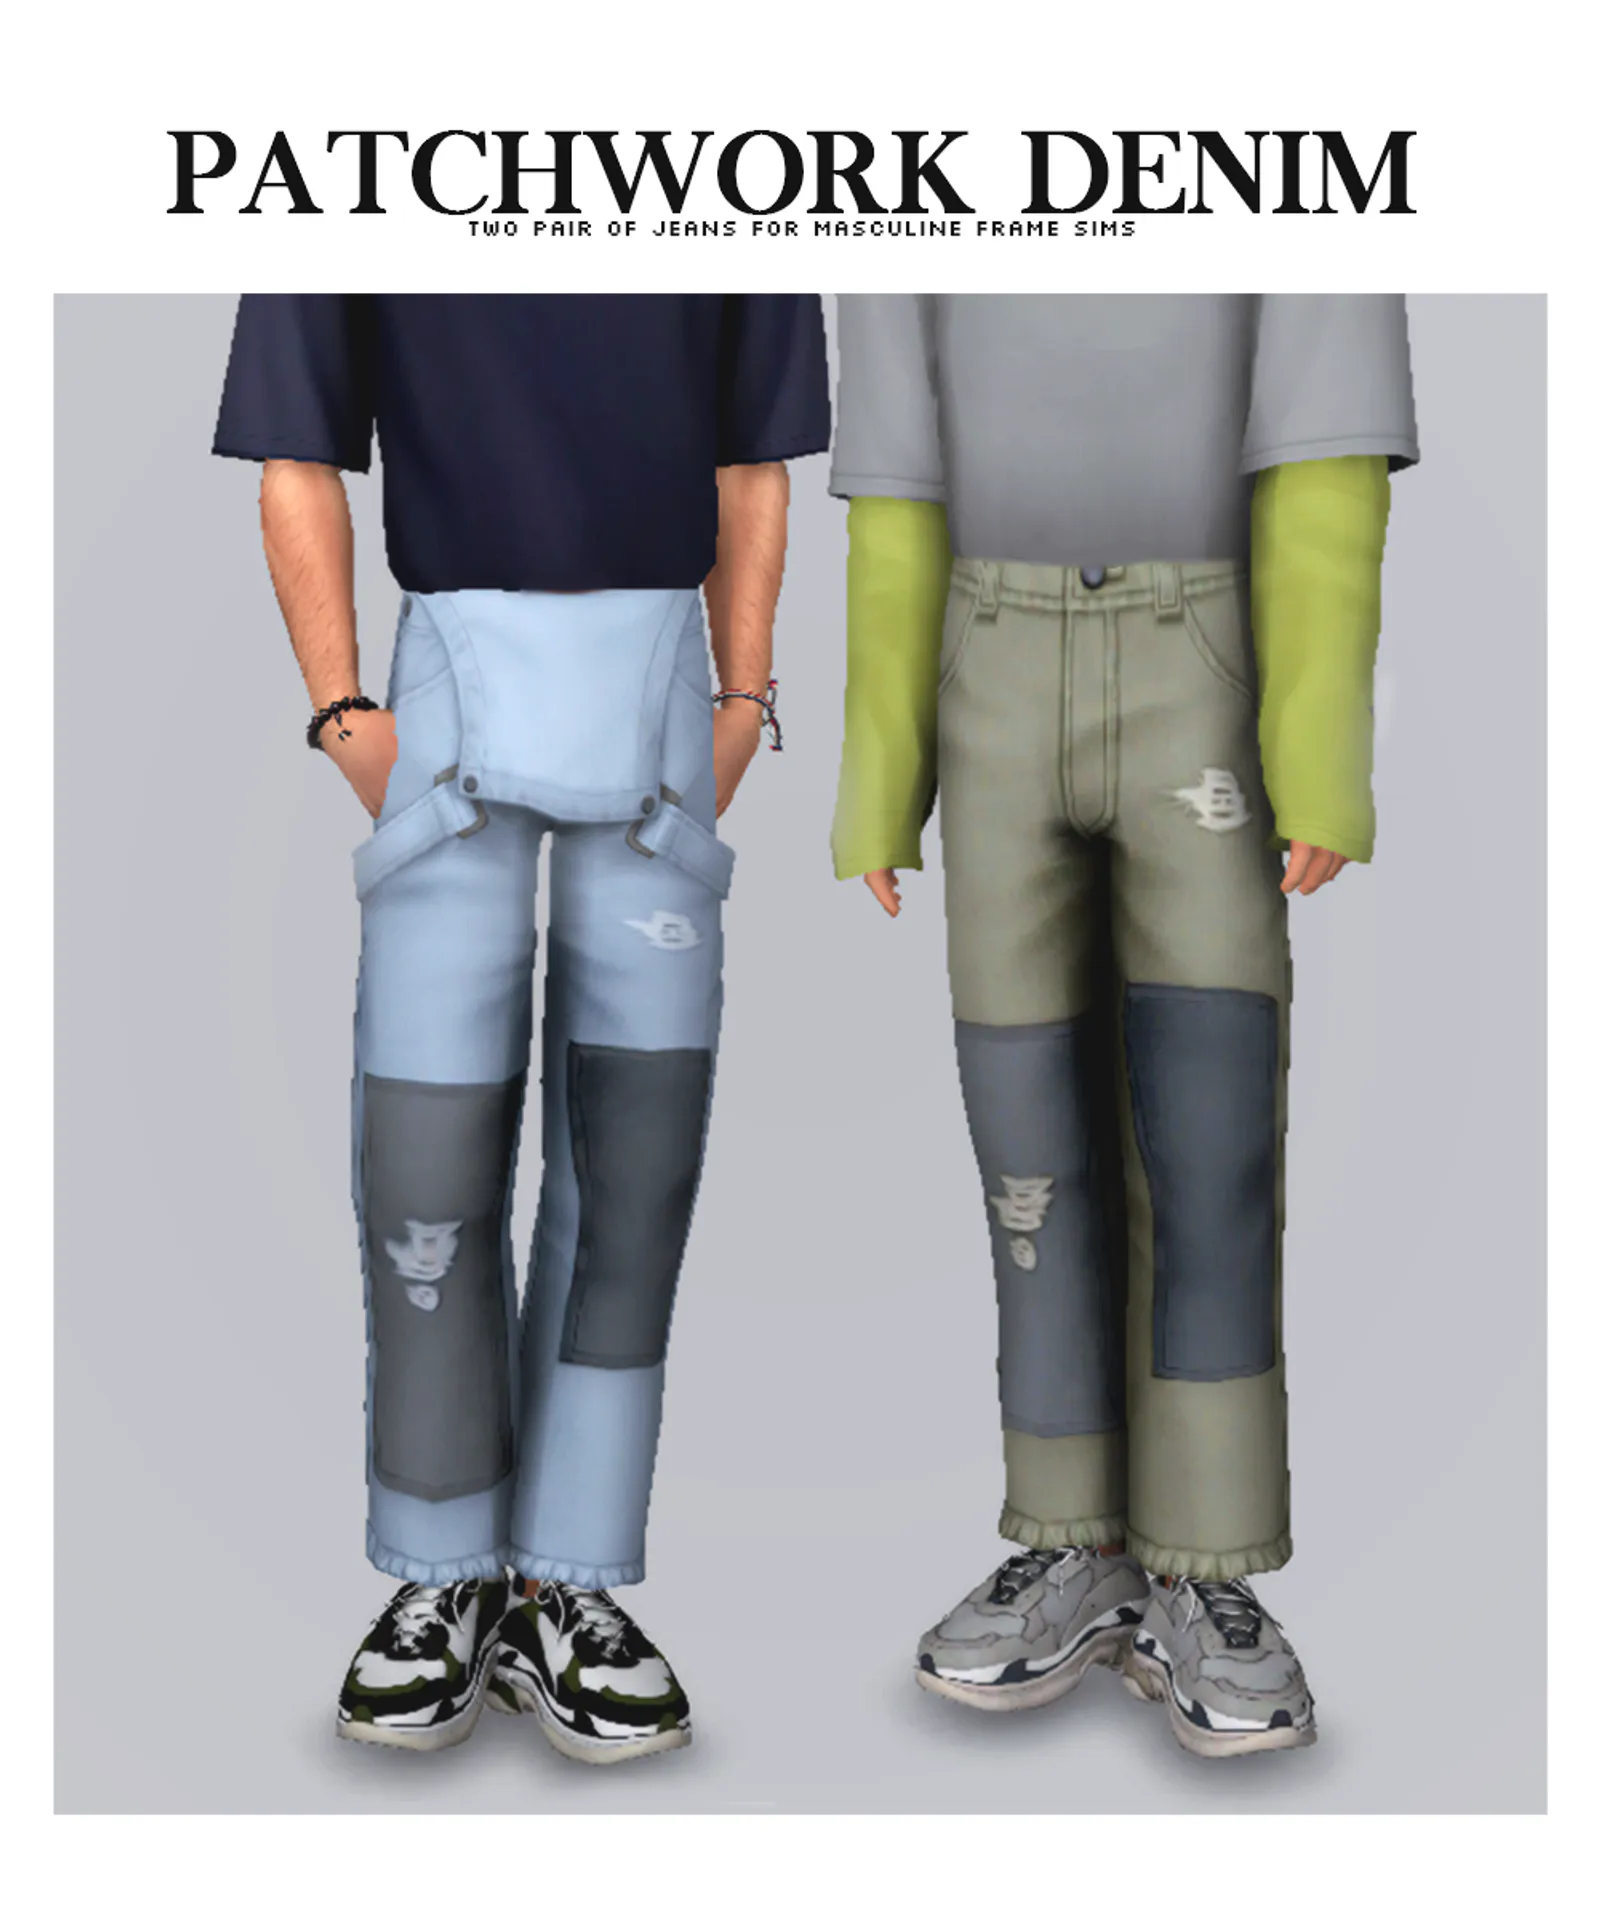 Patchwork Denim Jeans by @nucrests